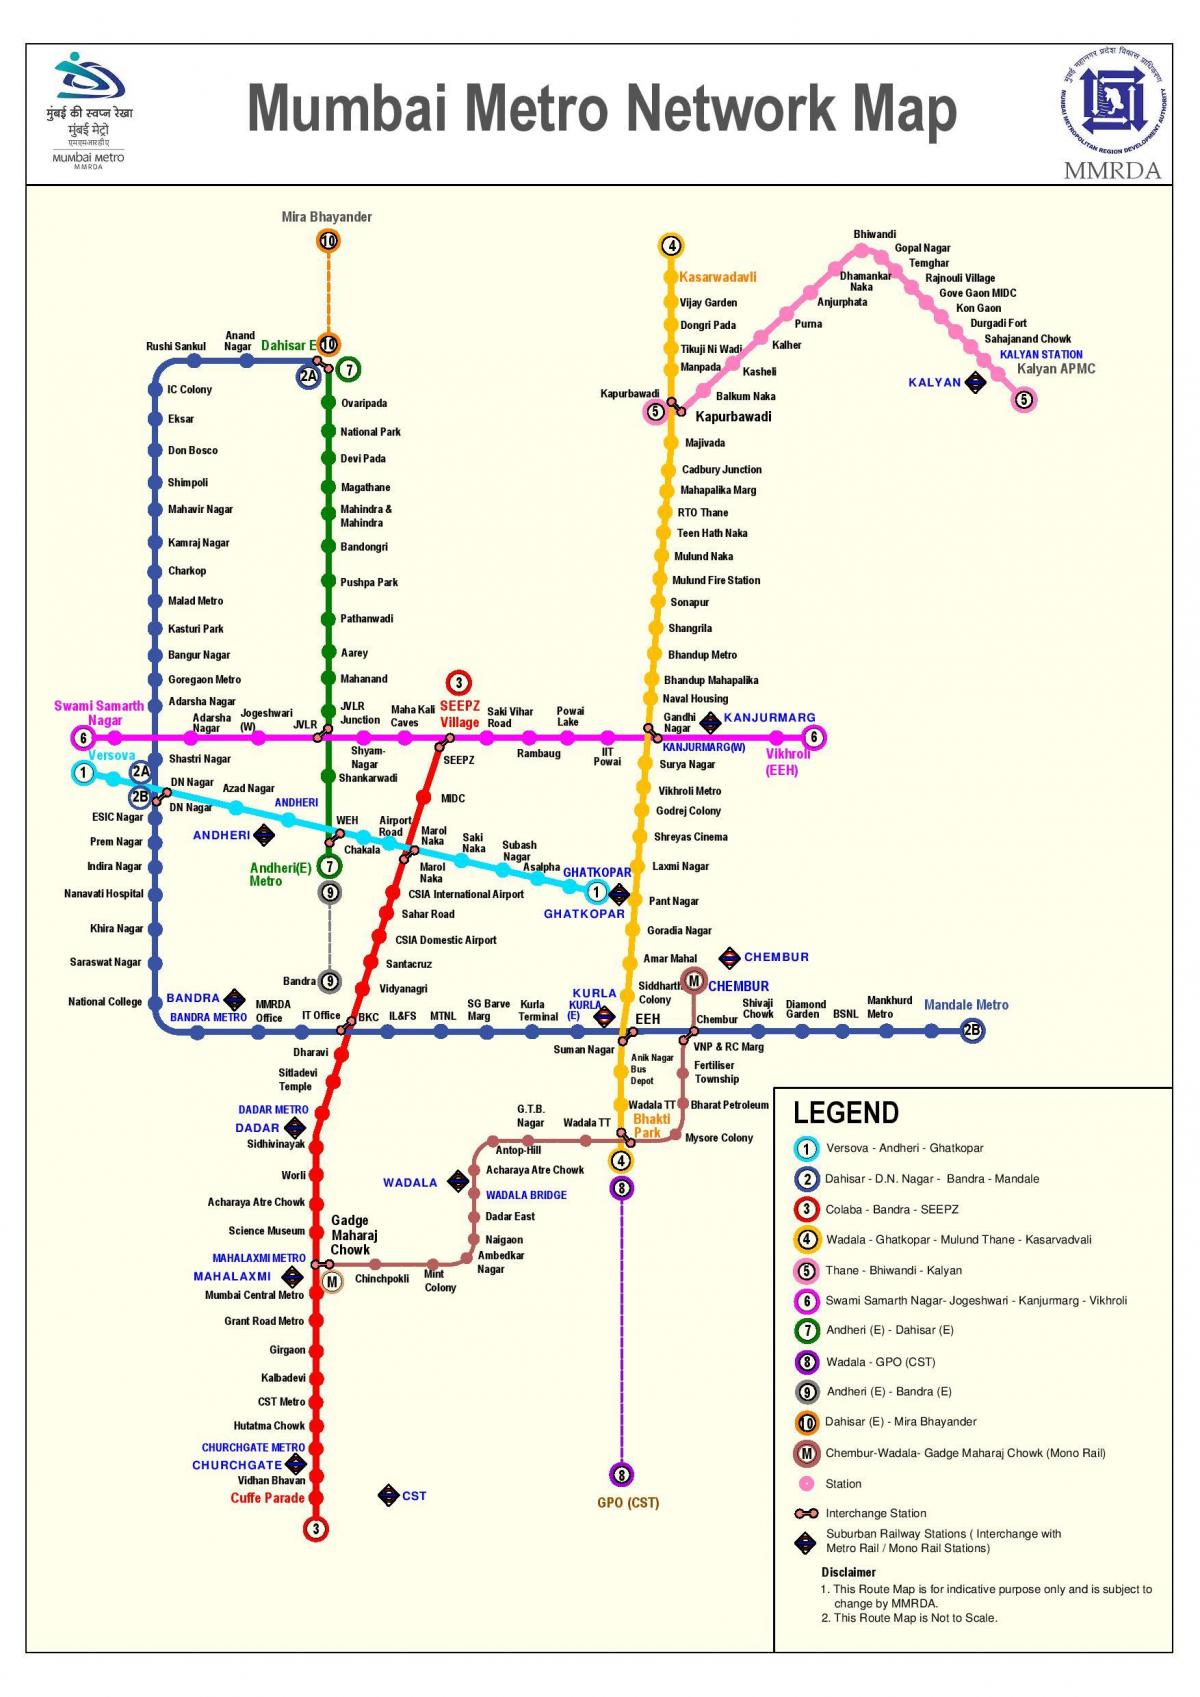 Мумбаи метро станица на мапа